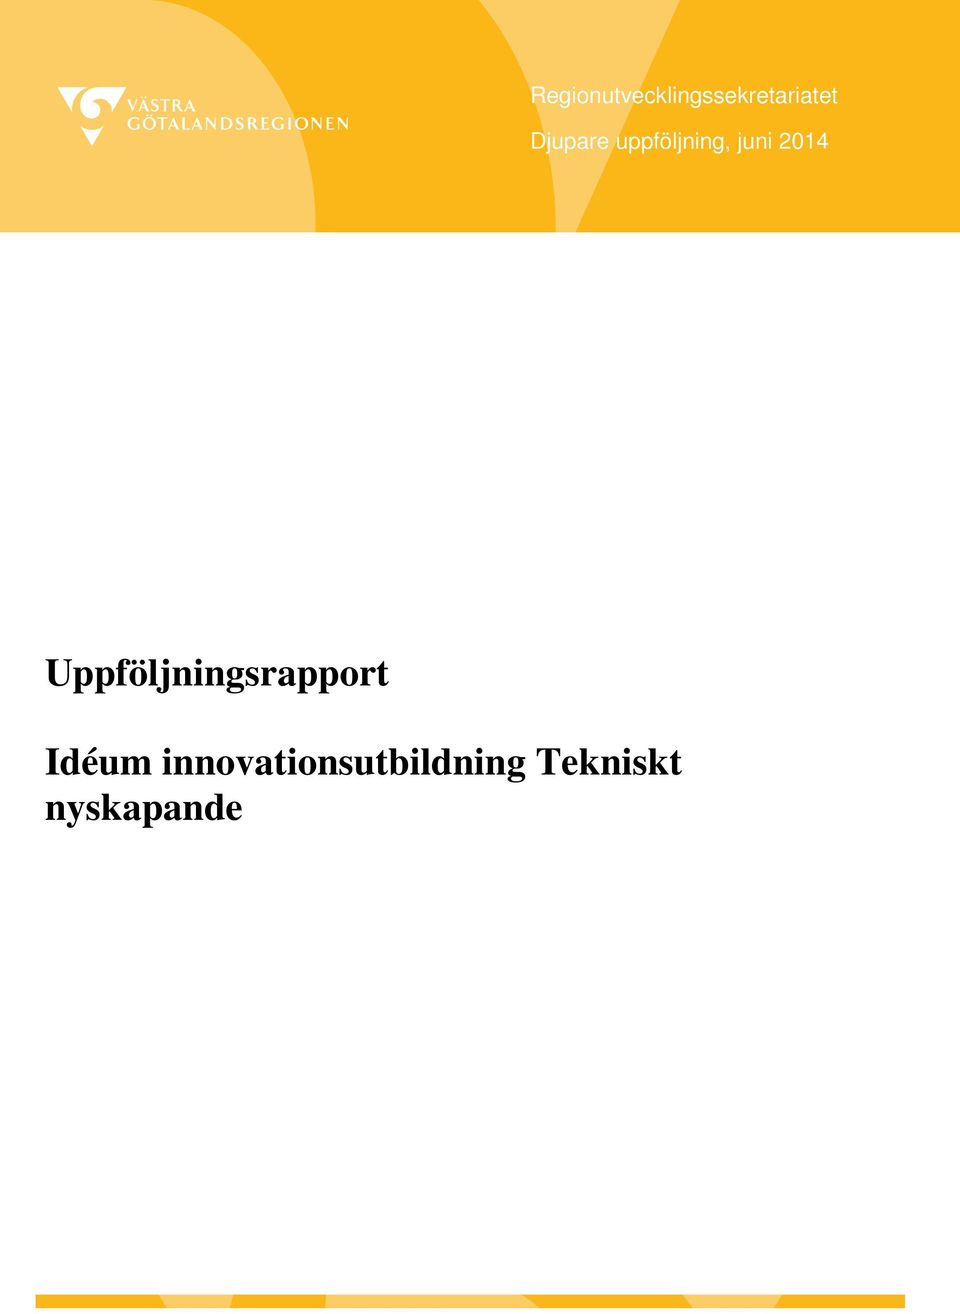 Uppföljningsrapport Idéum